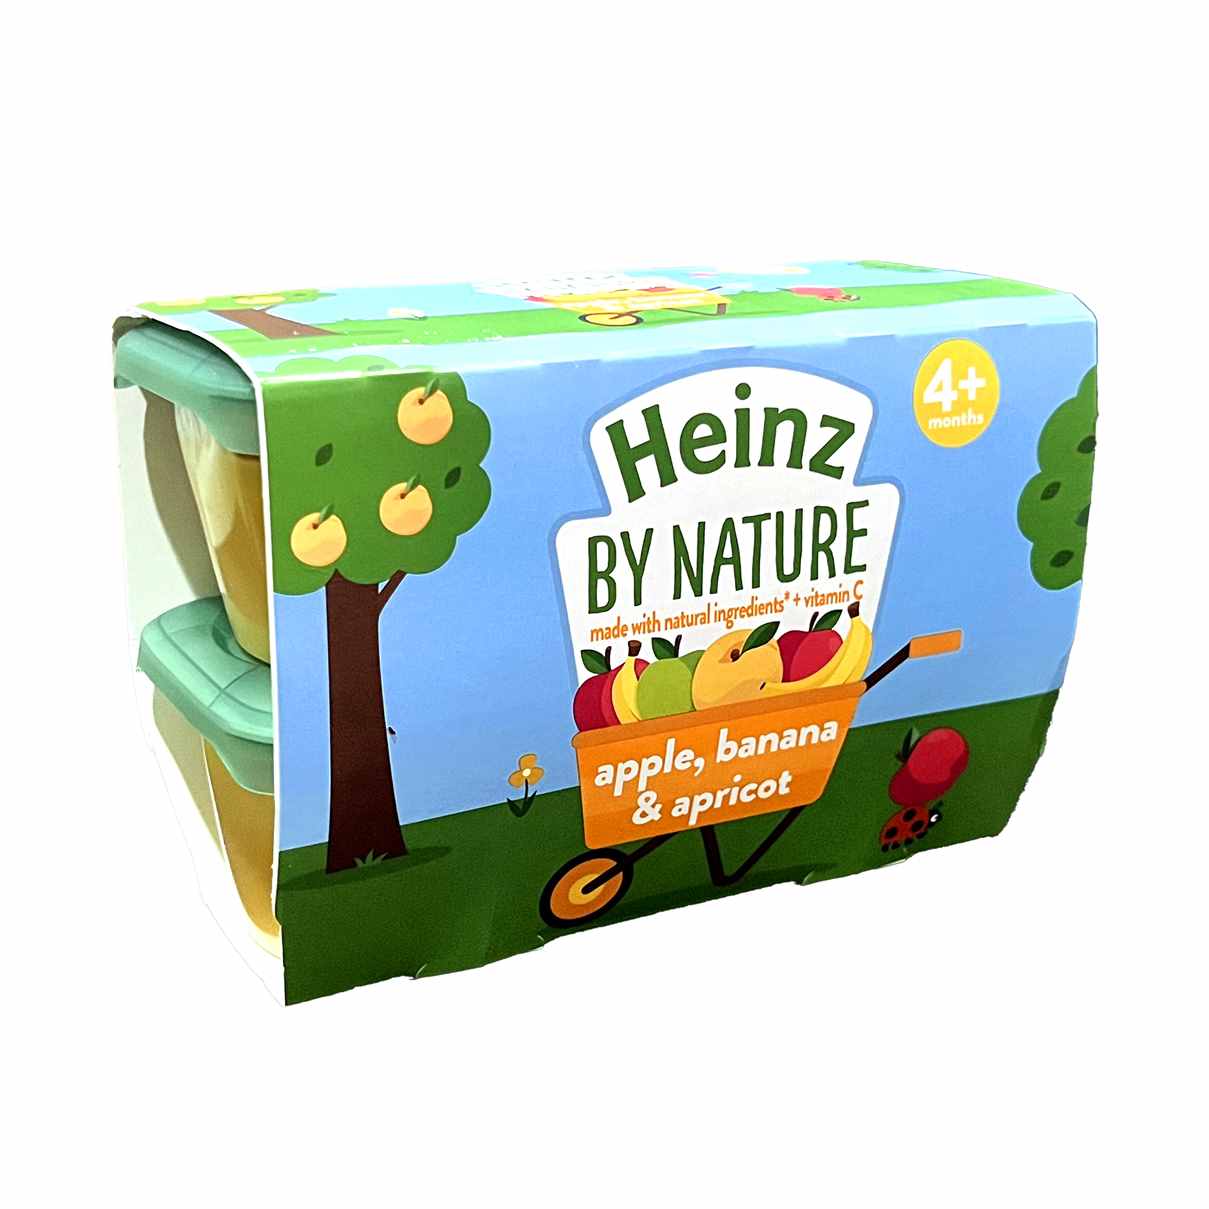 Heinz Puree For Babies - Apple, Banana & Apricot Flavor, 4-6months, 100g Each